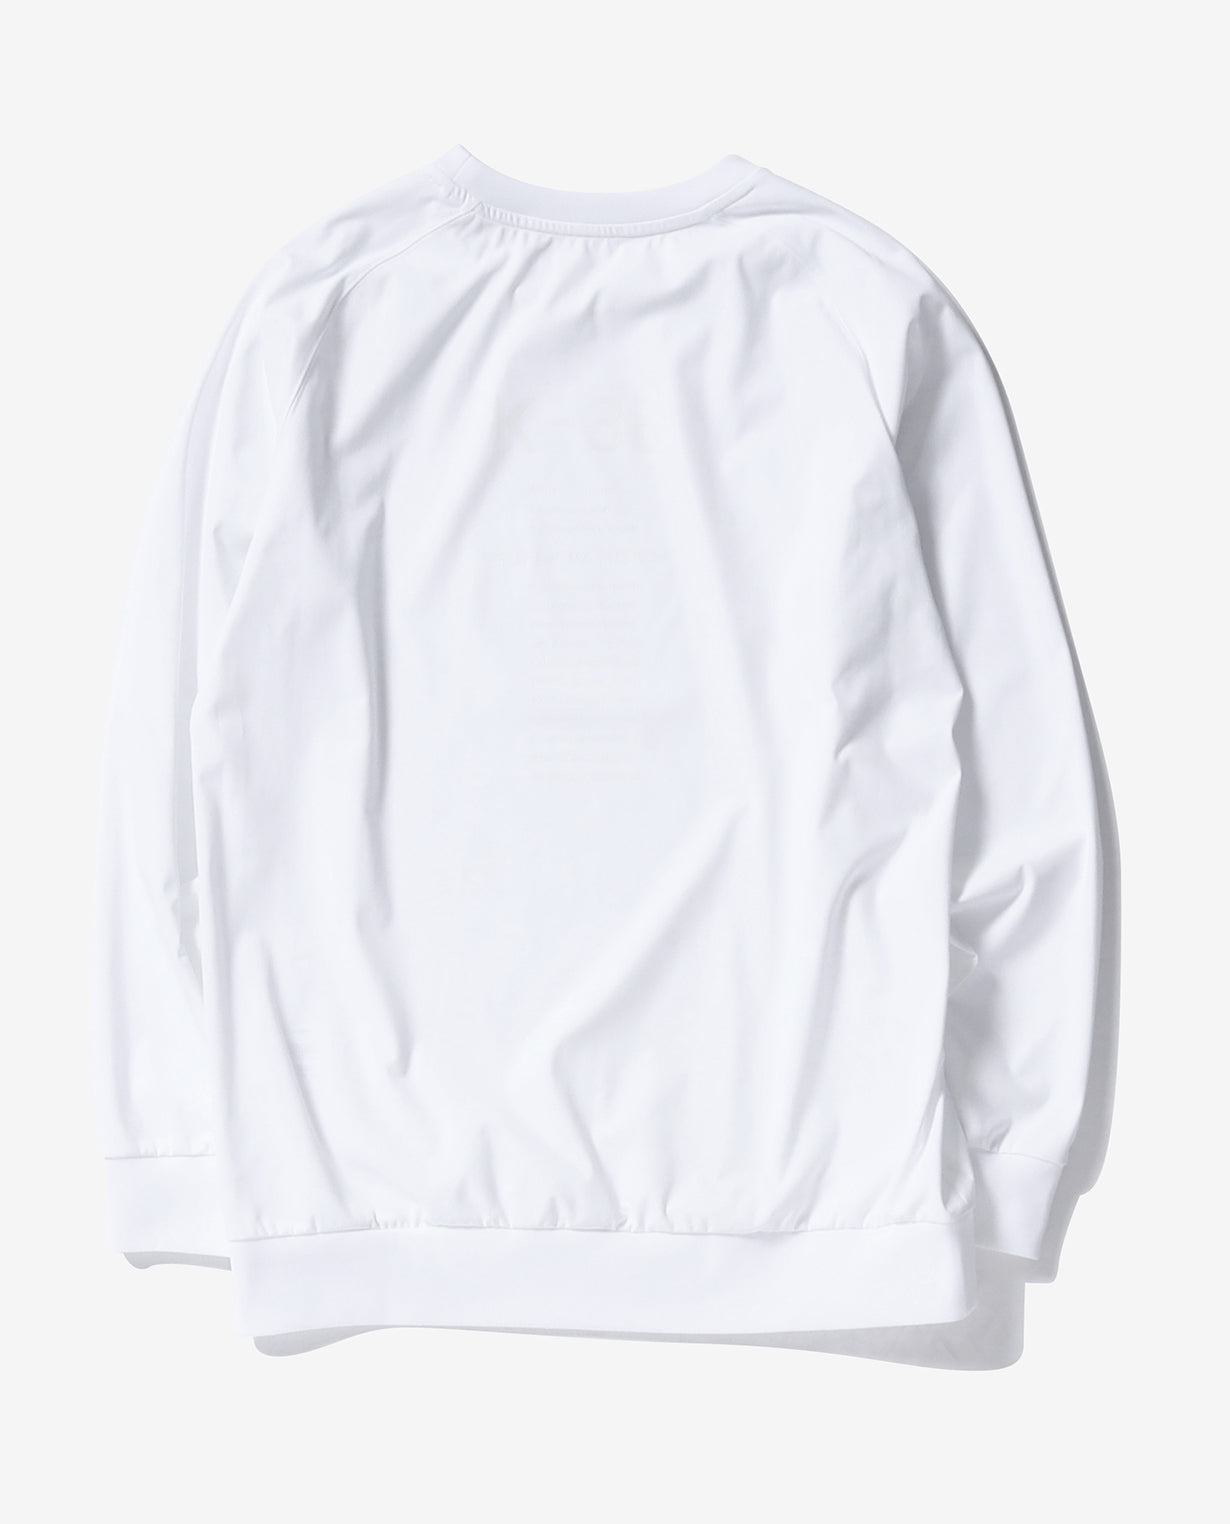 【RESTOCK!】■ホワイト 036_YG_E 長袖グラフィックTシャツ